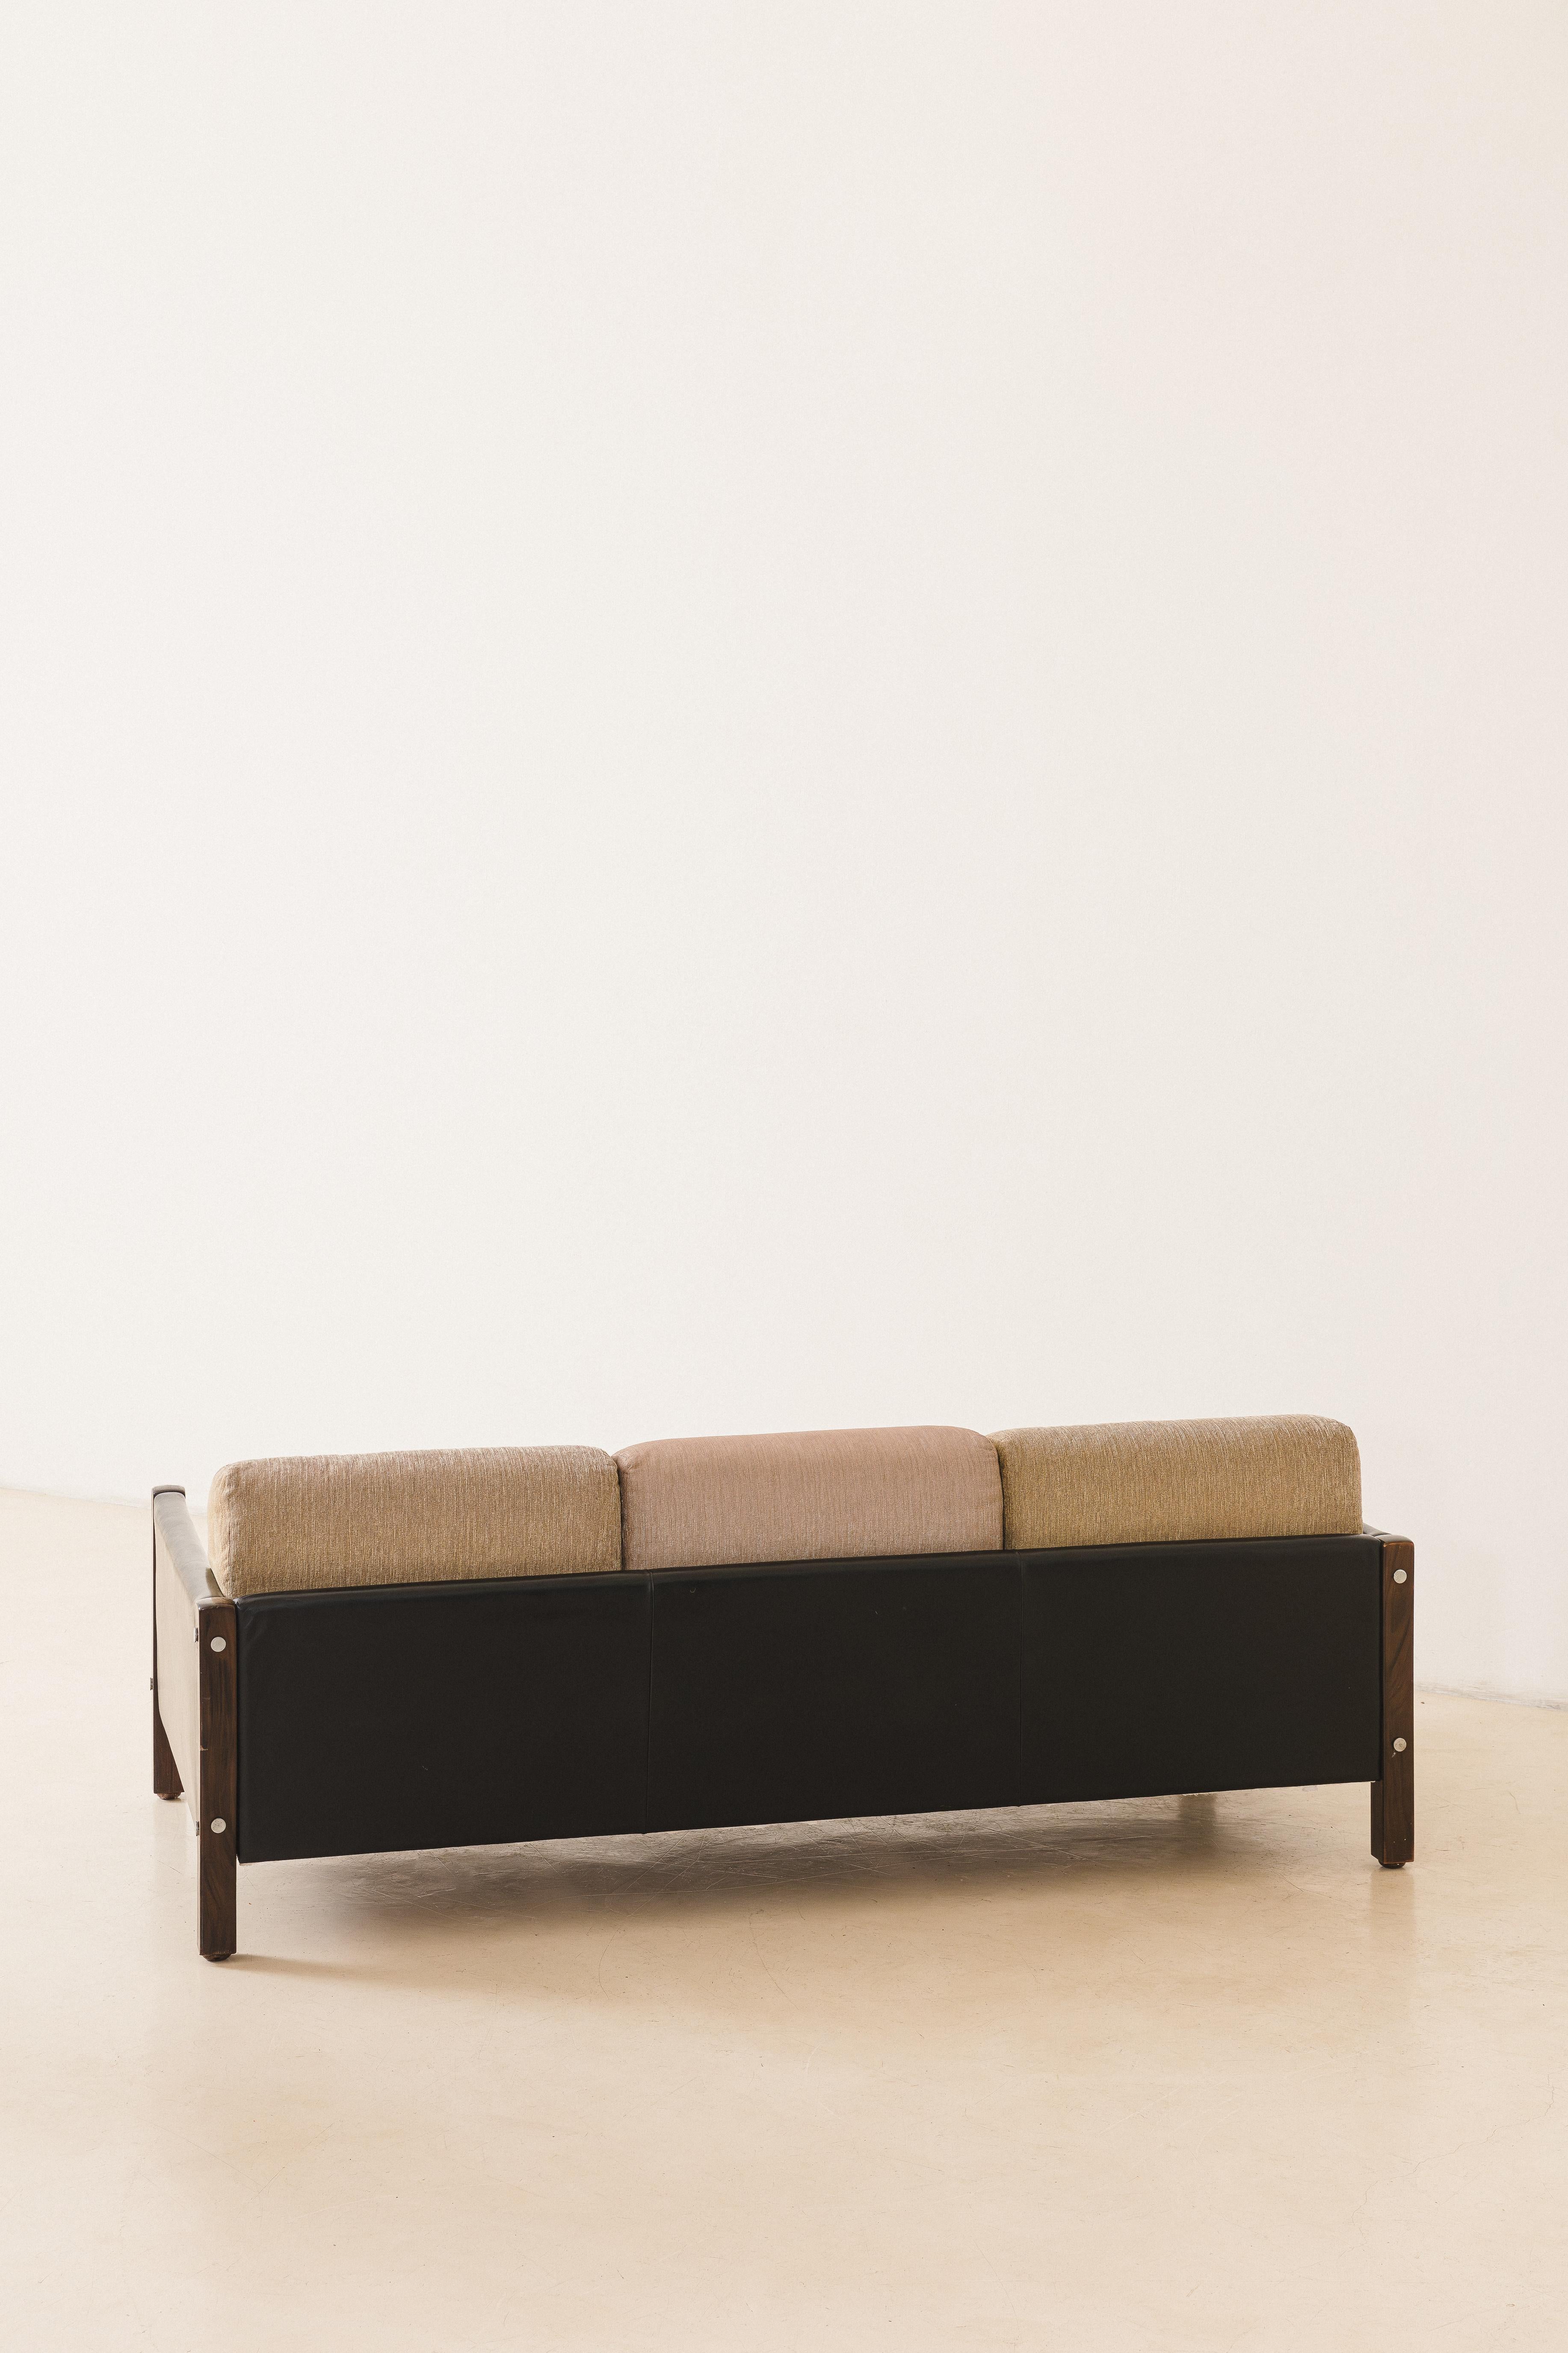 Dreisitziges Millor-Sofa aus Palisanderholz, Sergio Rodrigues Modernes Design, Brasilien, 1960er Jahre (Mitte des 20. Jahrhunderts) im Angebot